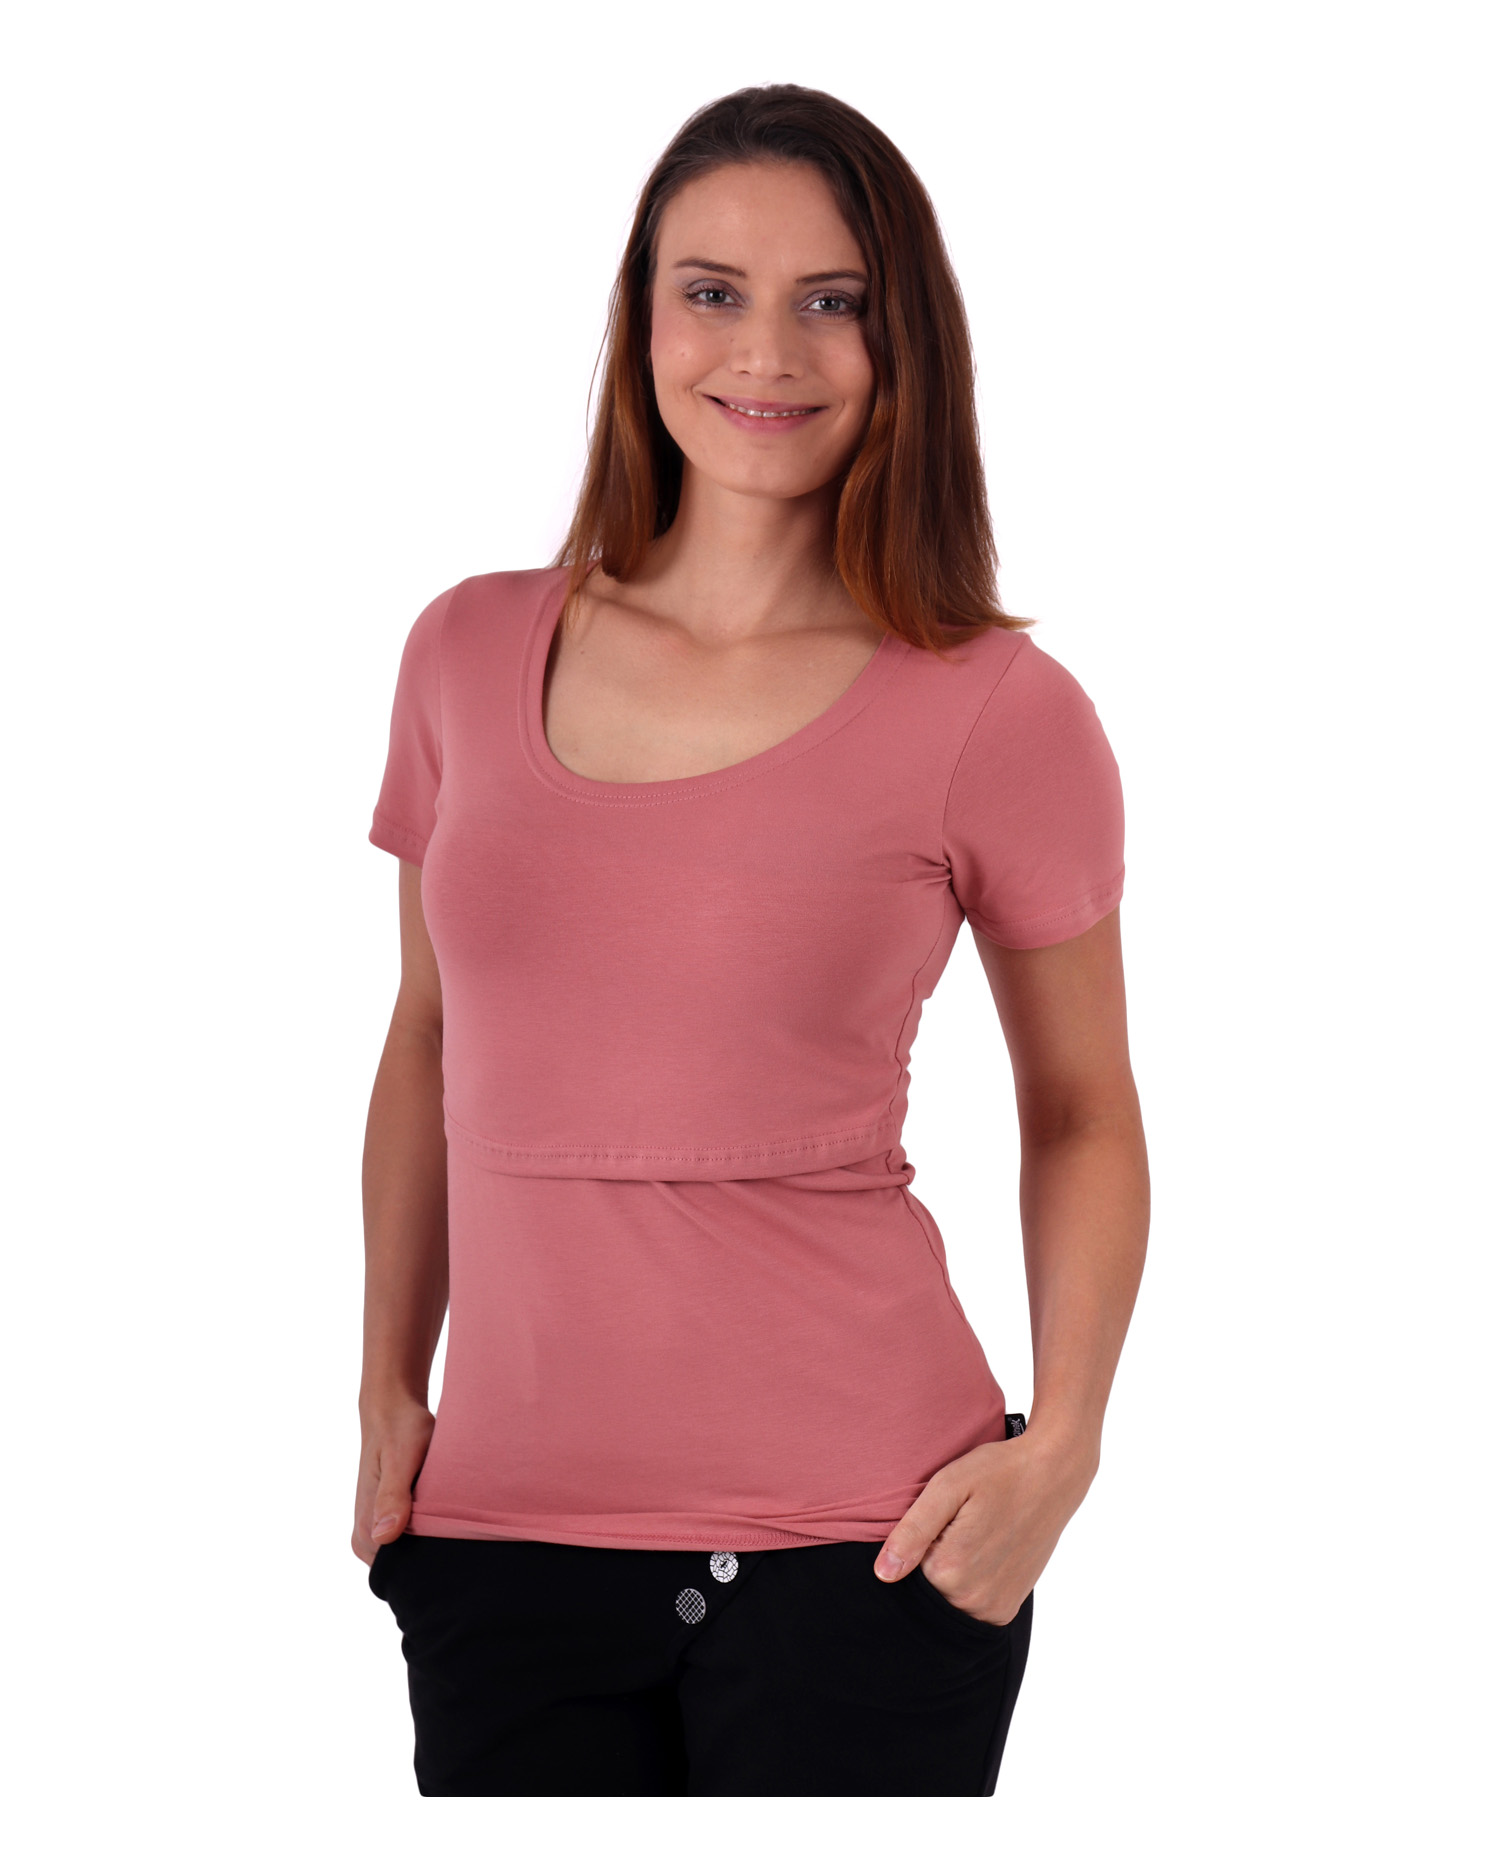 Breast-feeding T-shirt Katerina, short sleeves, old rose